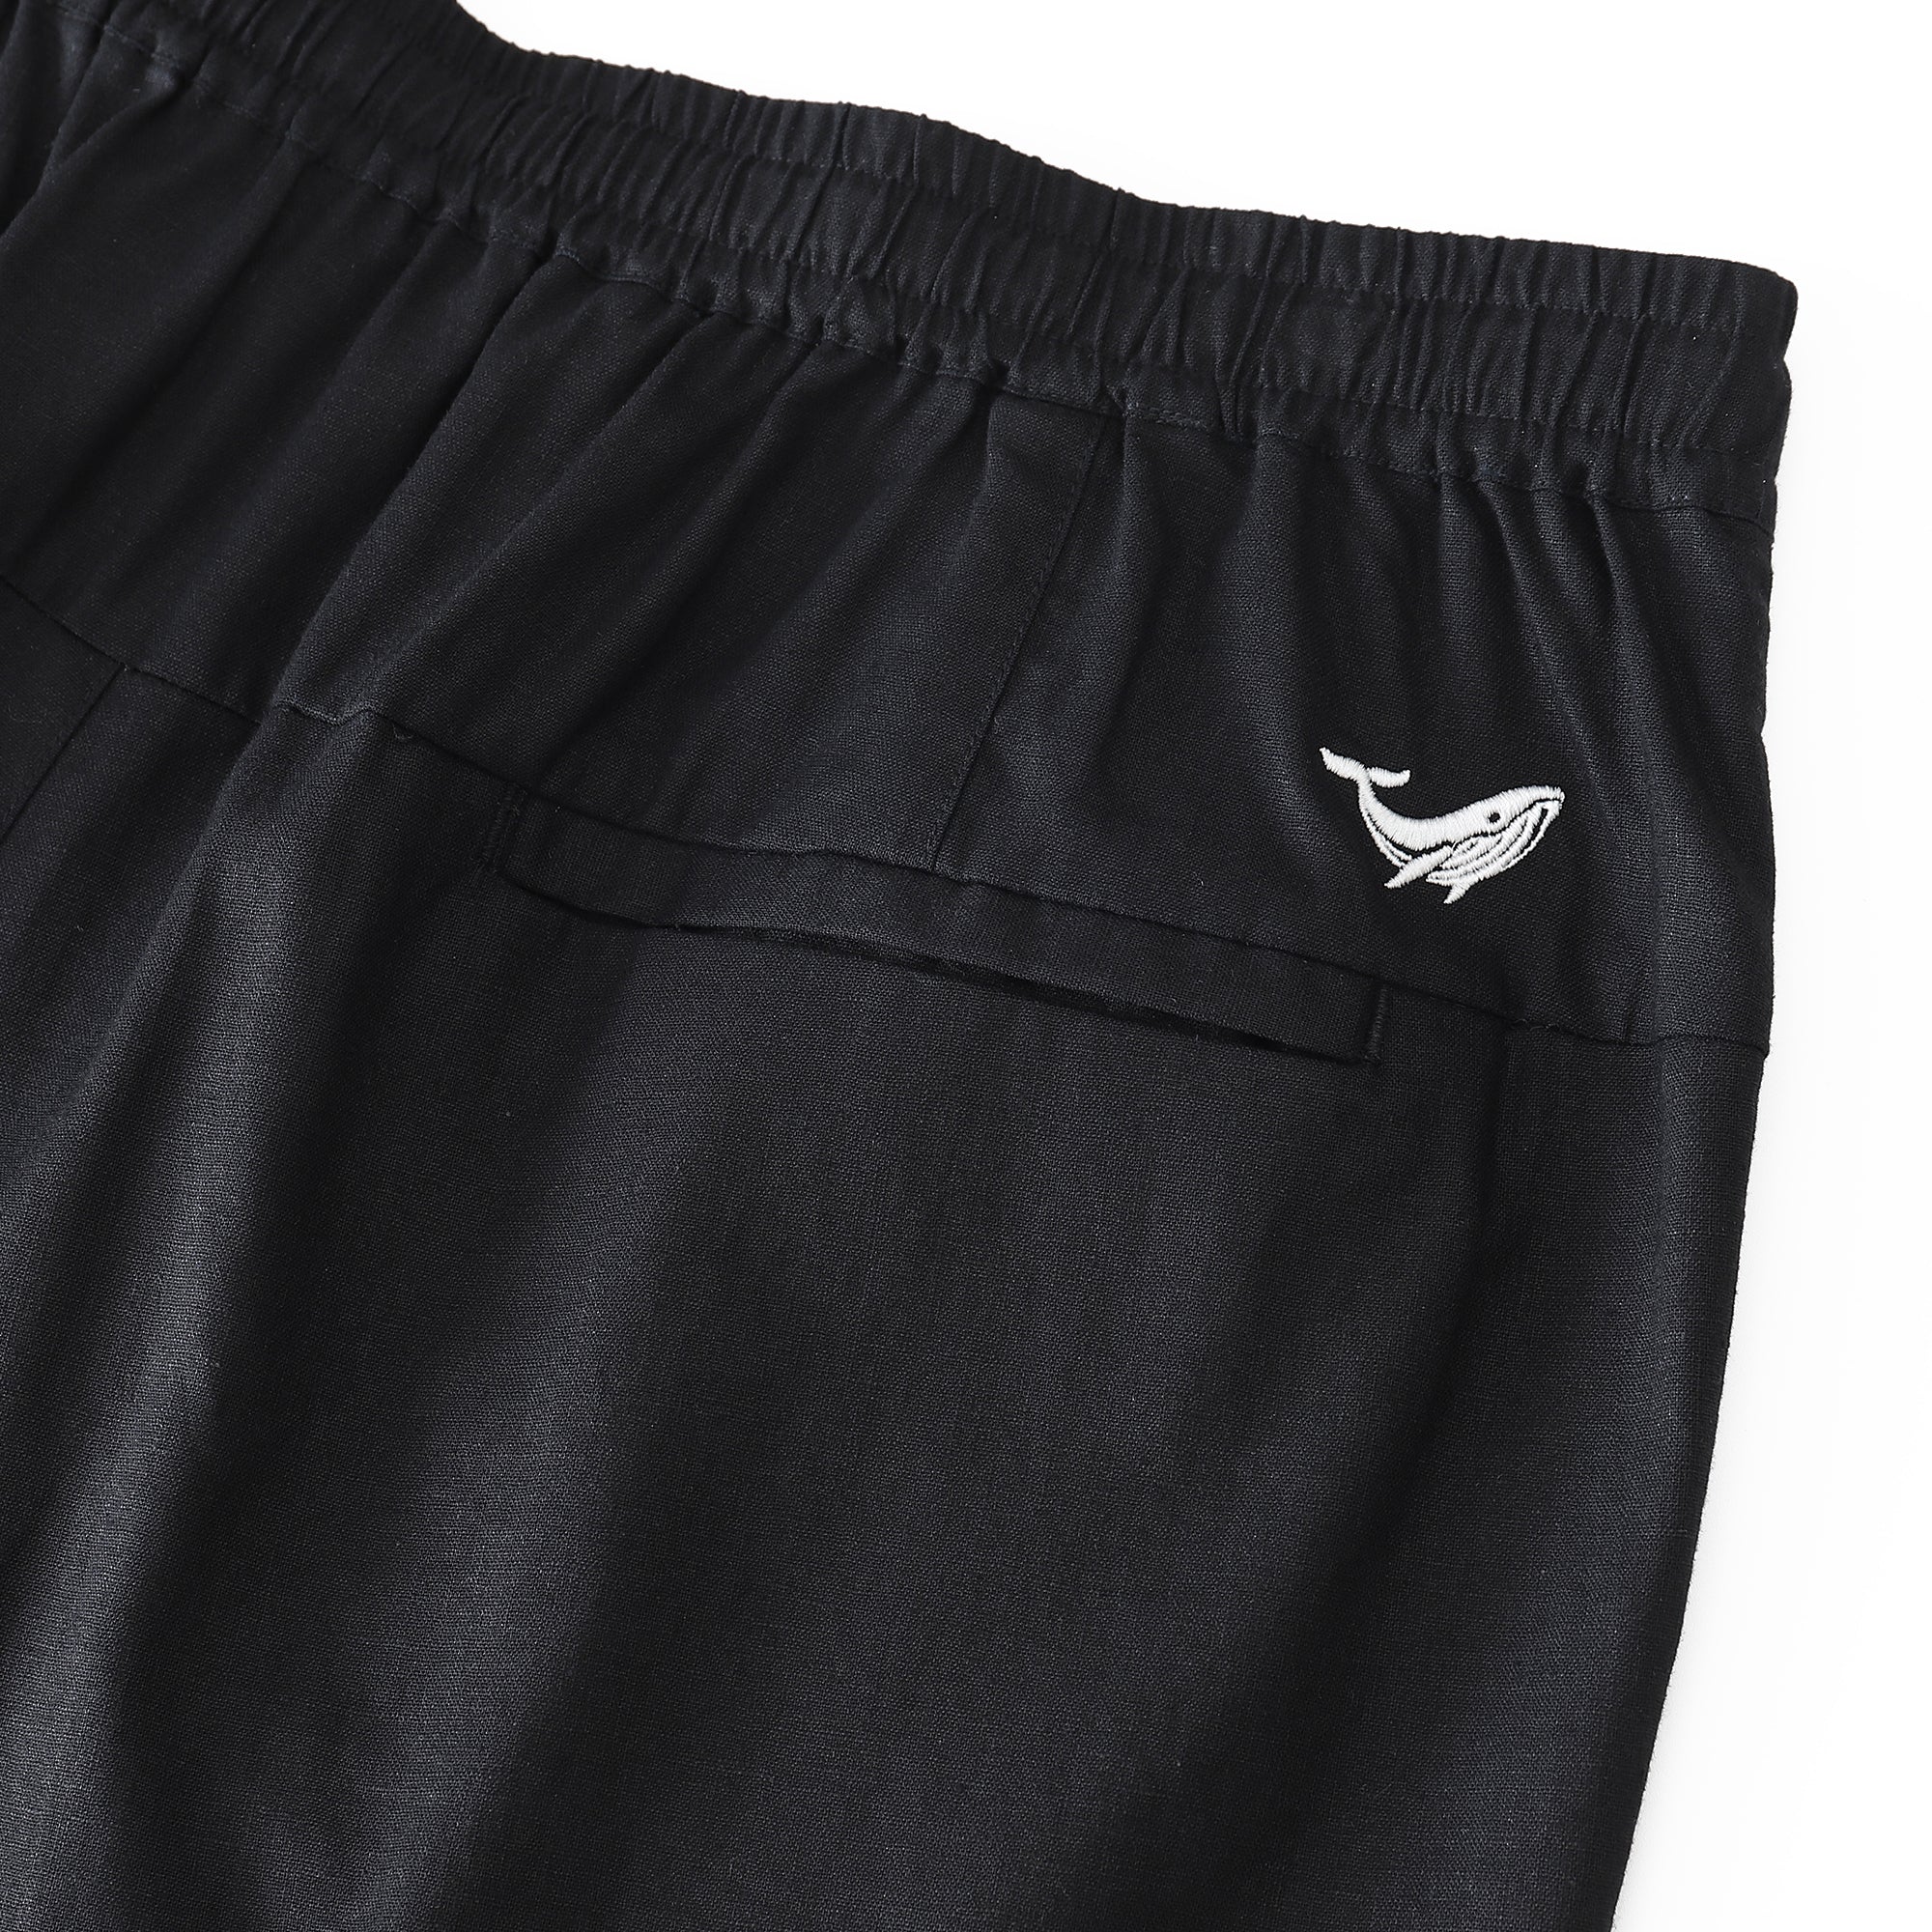 Mid-Rise Straight Bermuda 8-10 Inch Shorts - BLACK Version 1.0